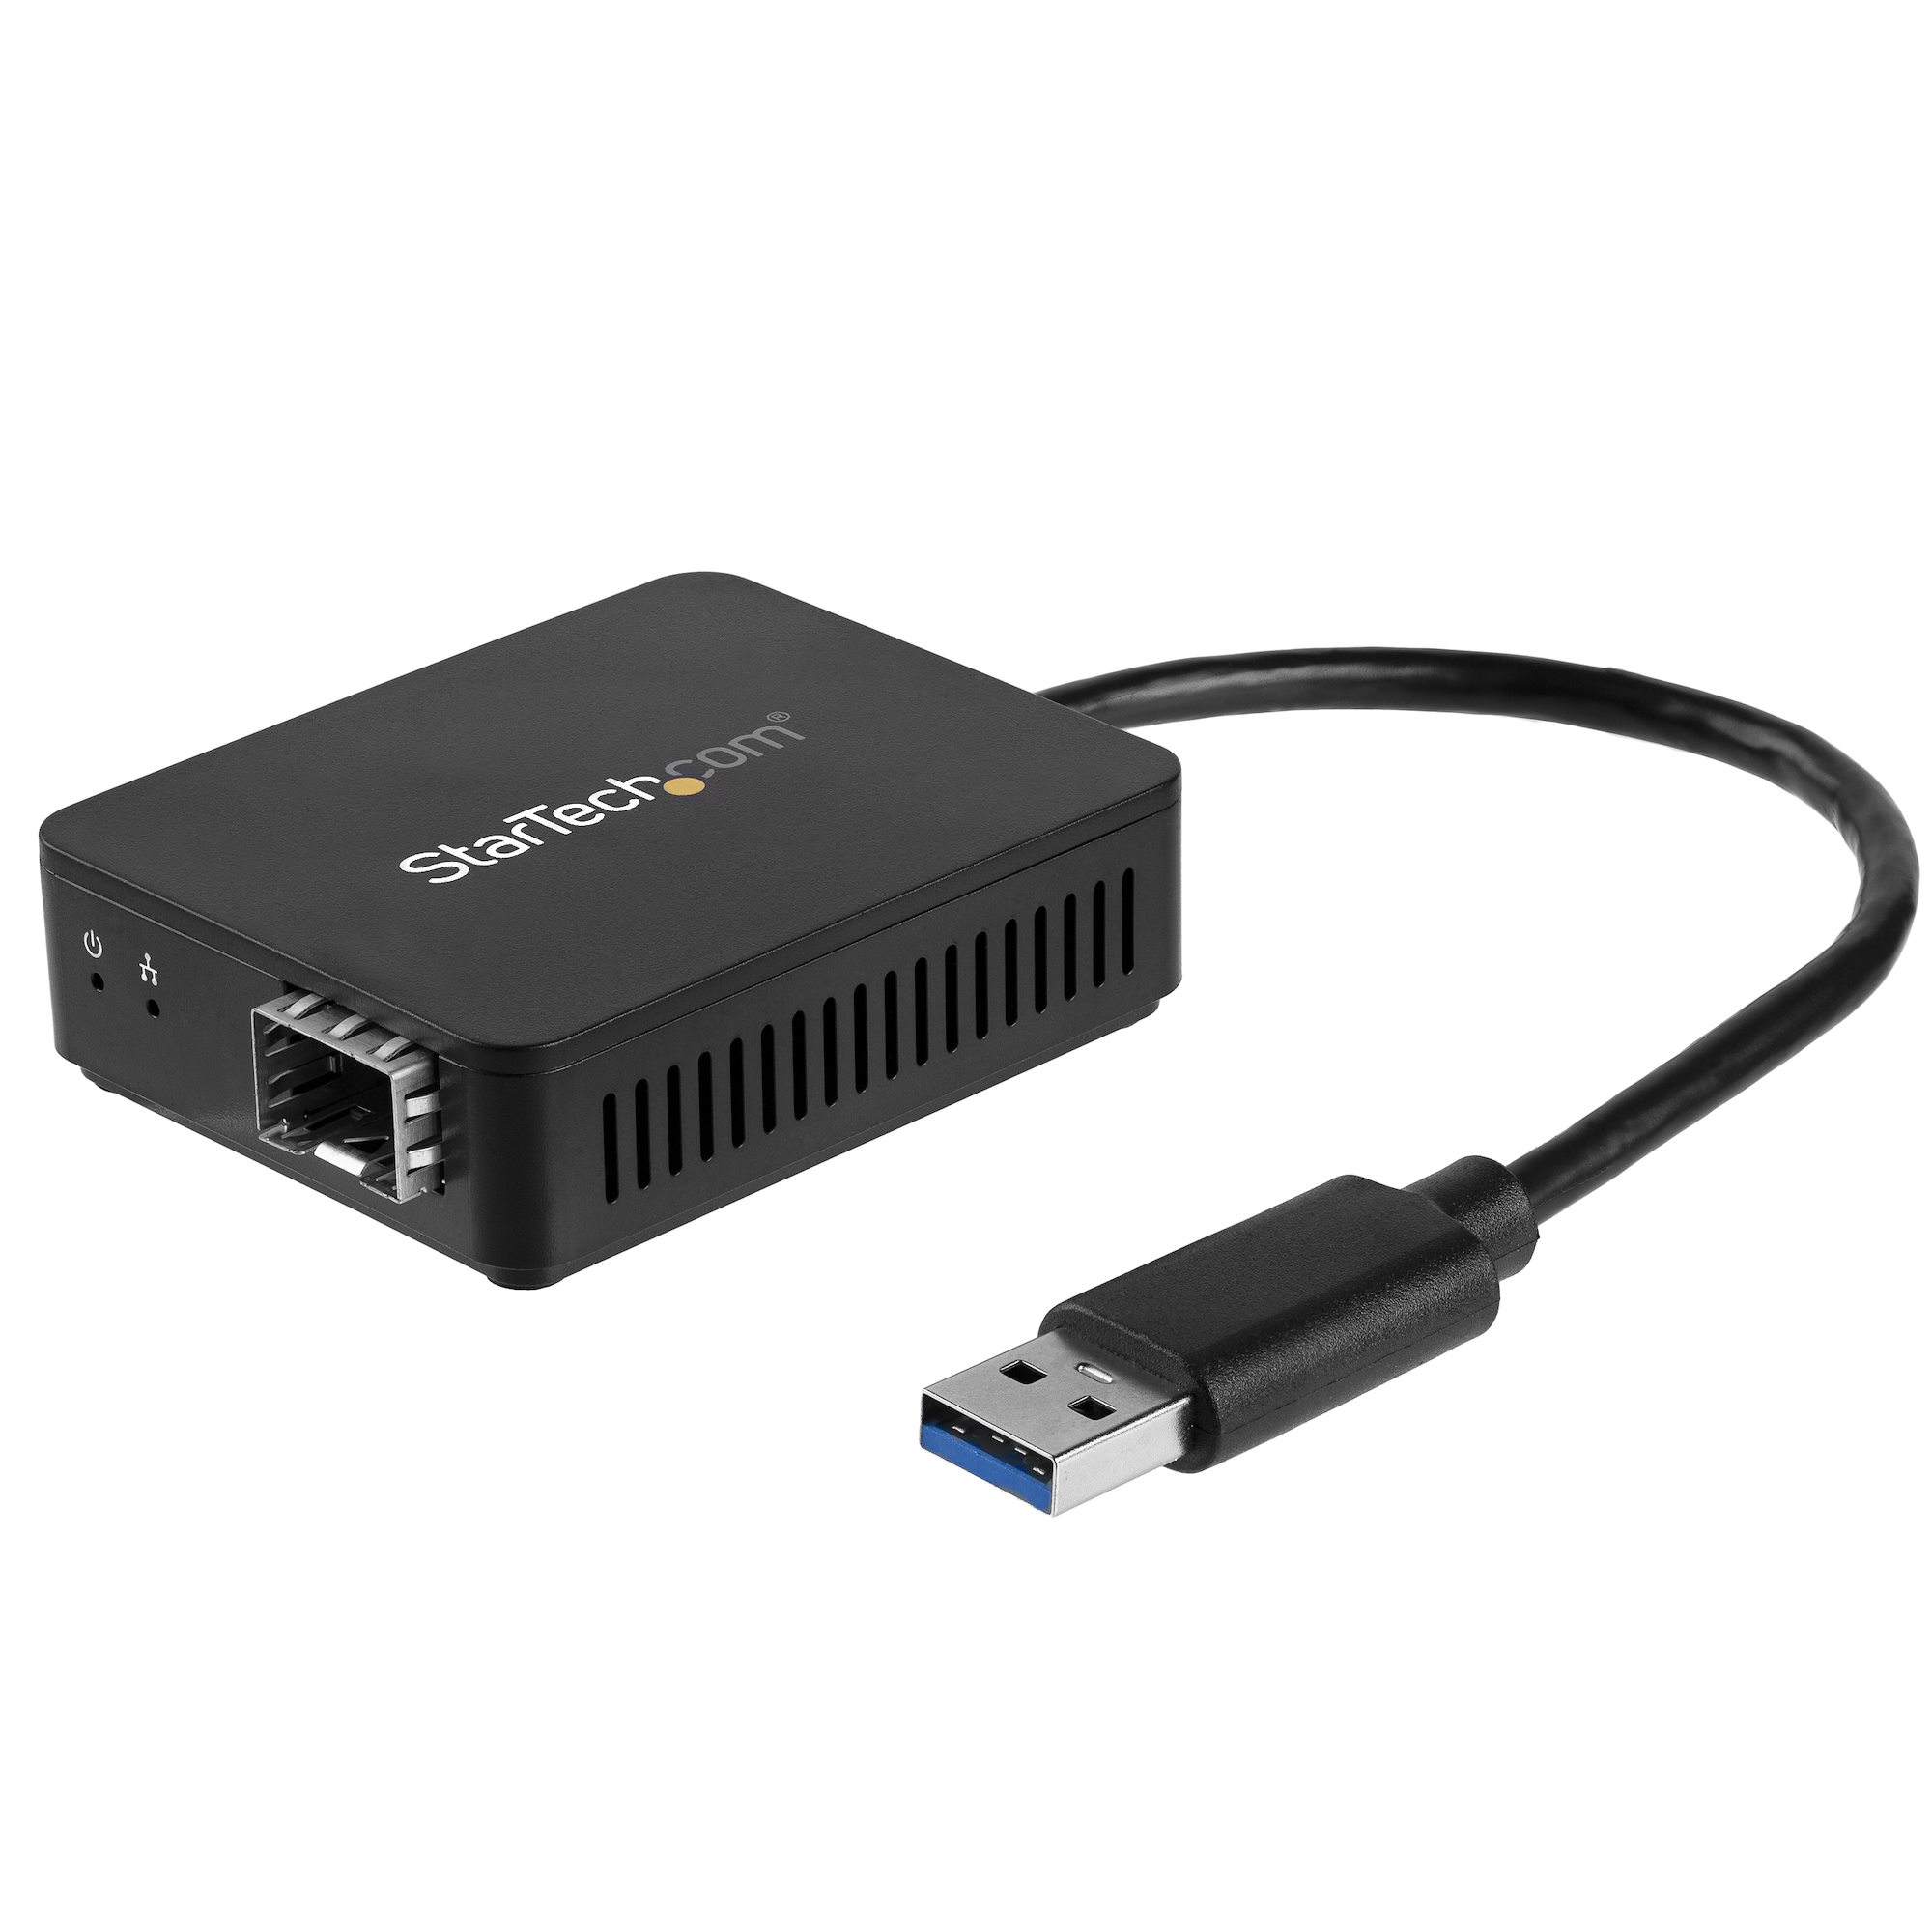 StarTech.com USB 3.0 to Fiber Optic Converter - Compact USB to Open SFP Adapter - USB to Gigabit Network Adapter - USB 3.0 Fiber Adapter Multi Mode(MMF)/Single Mode Fiber(SMF) Compatible